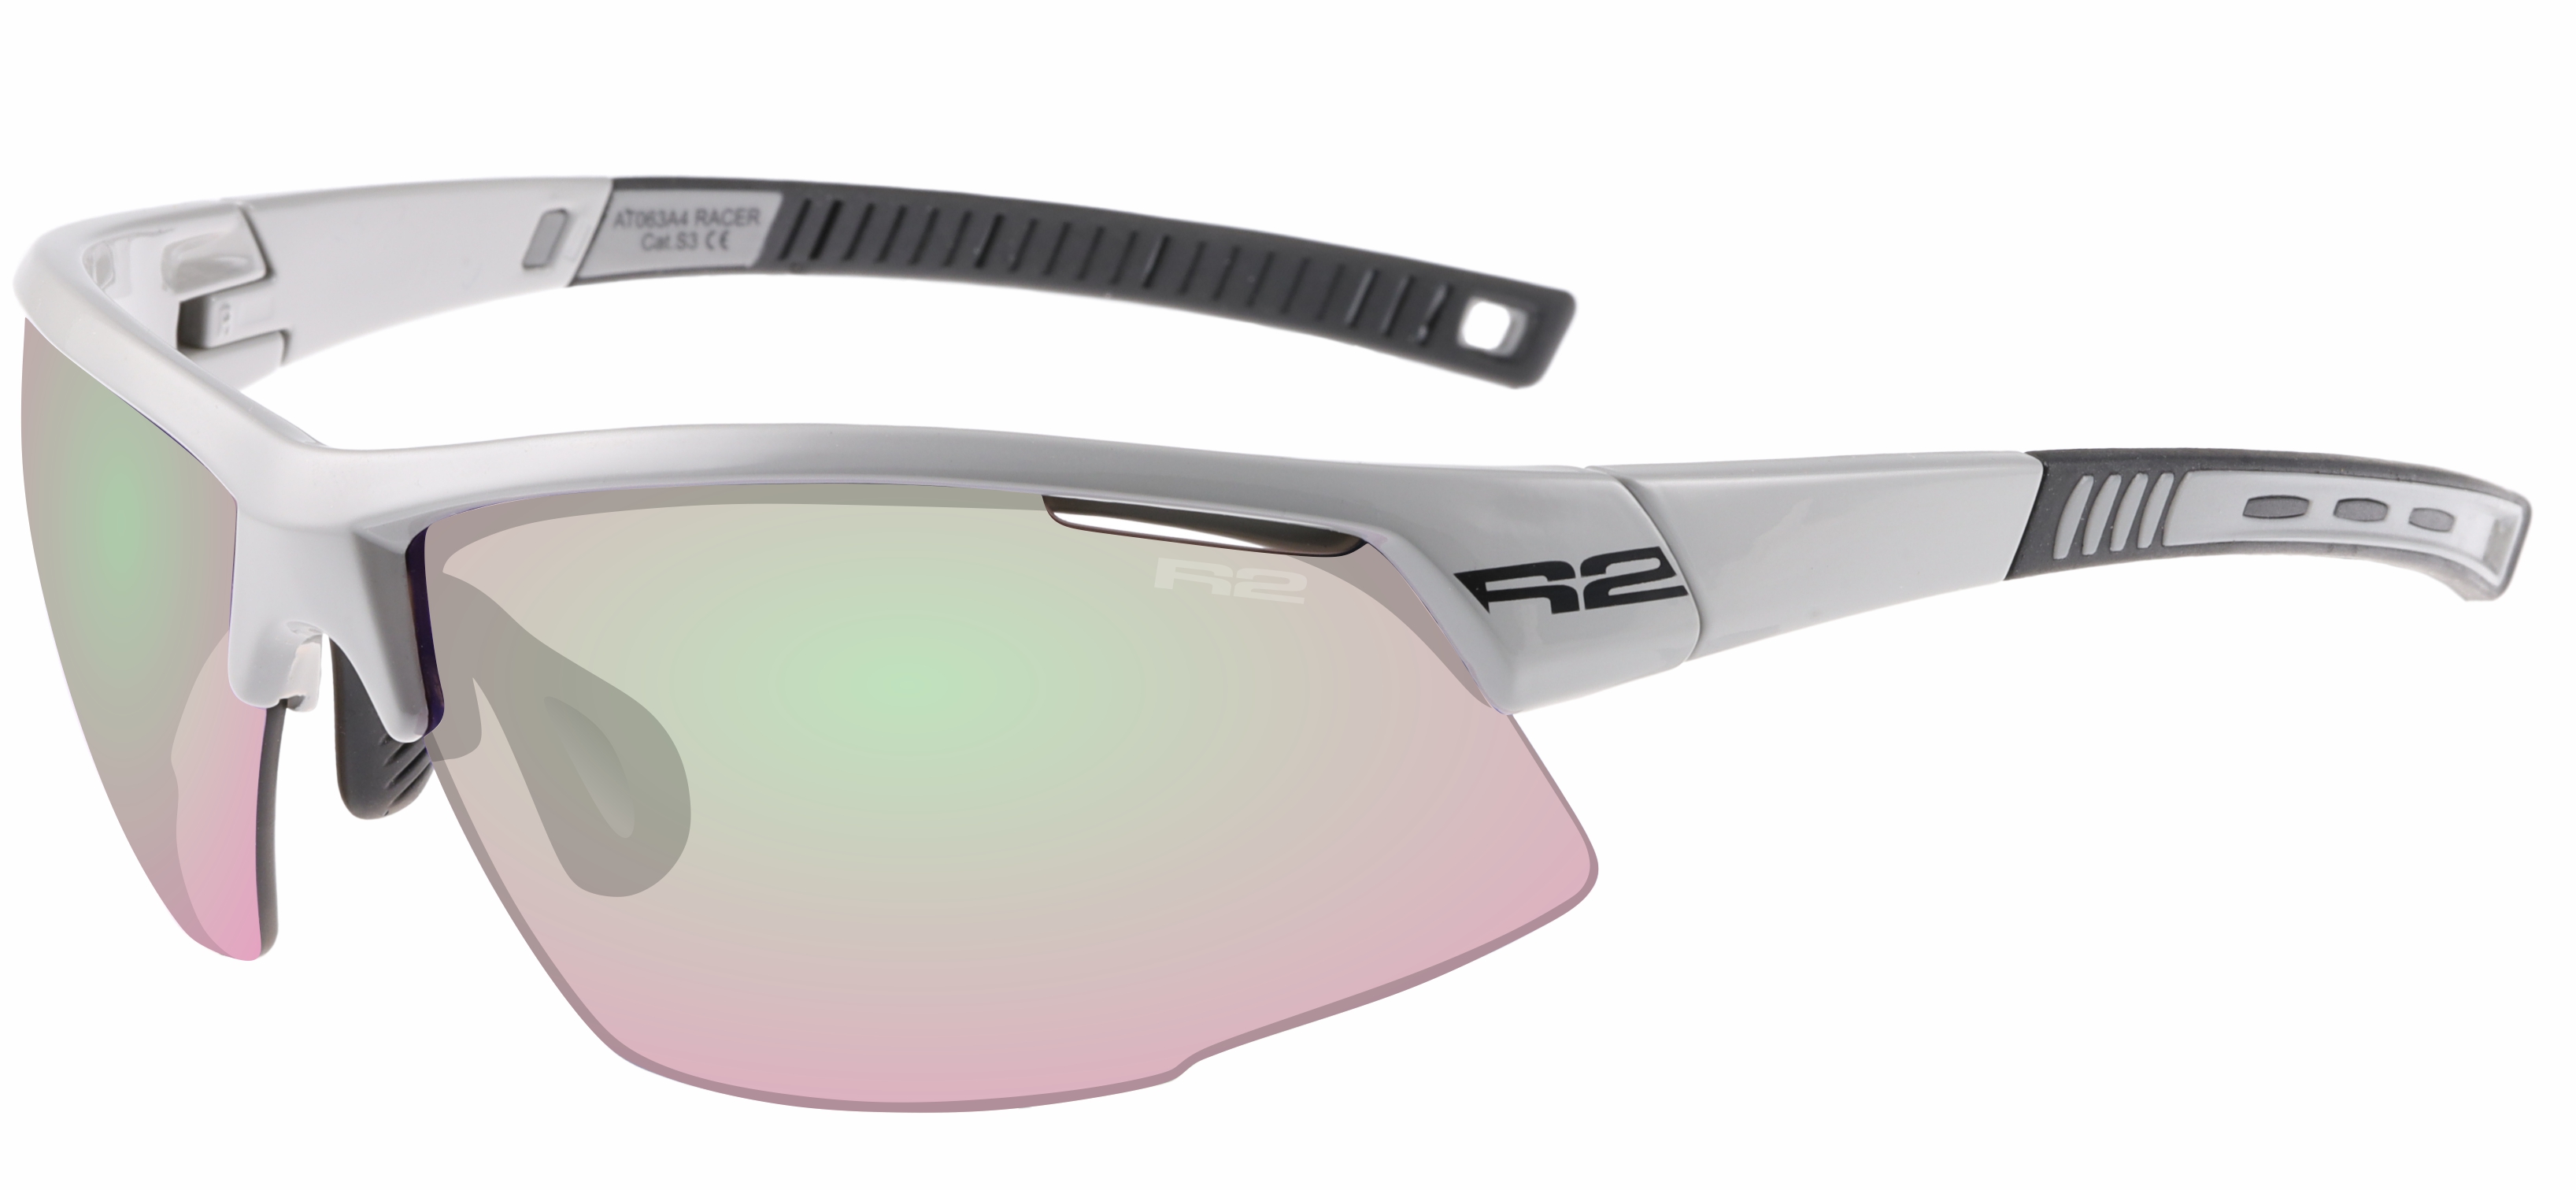 Sport sunglasses R2 RACER AT063A4 standard